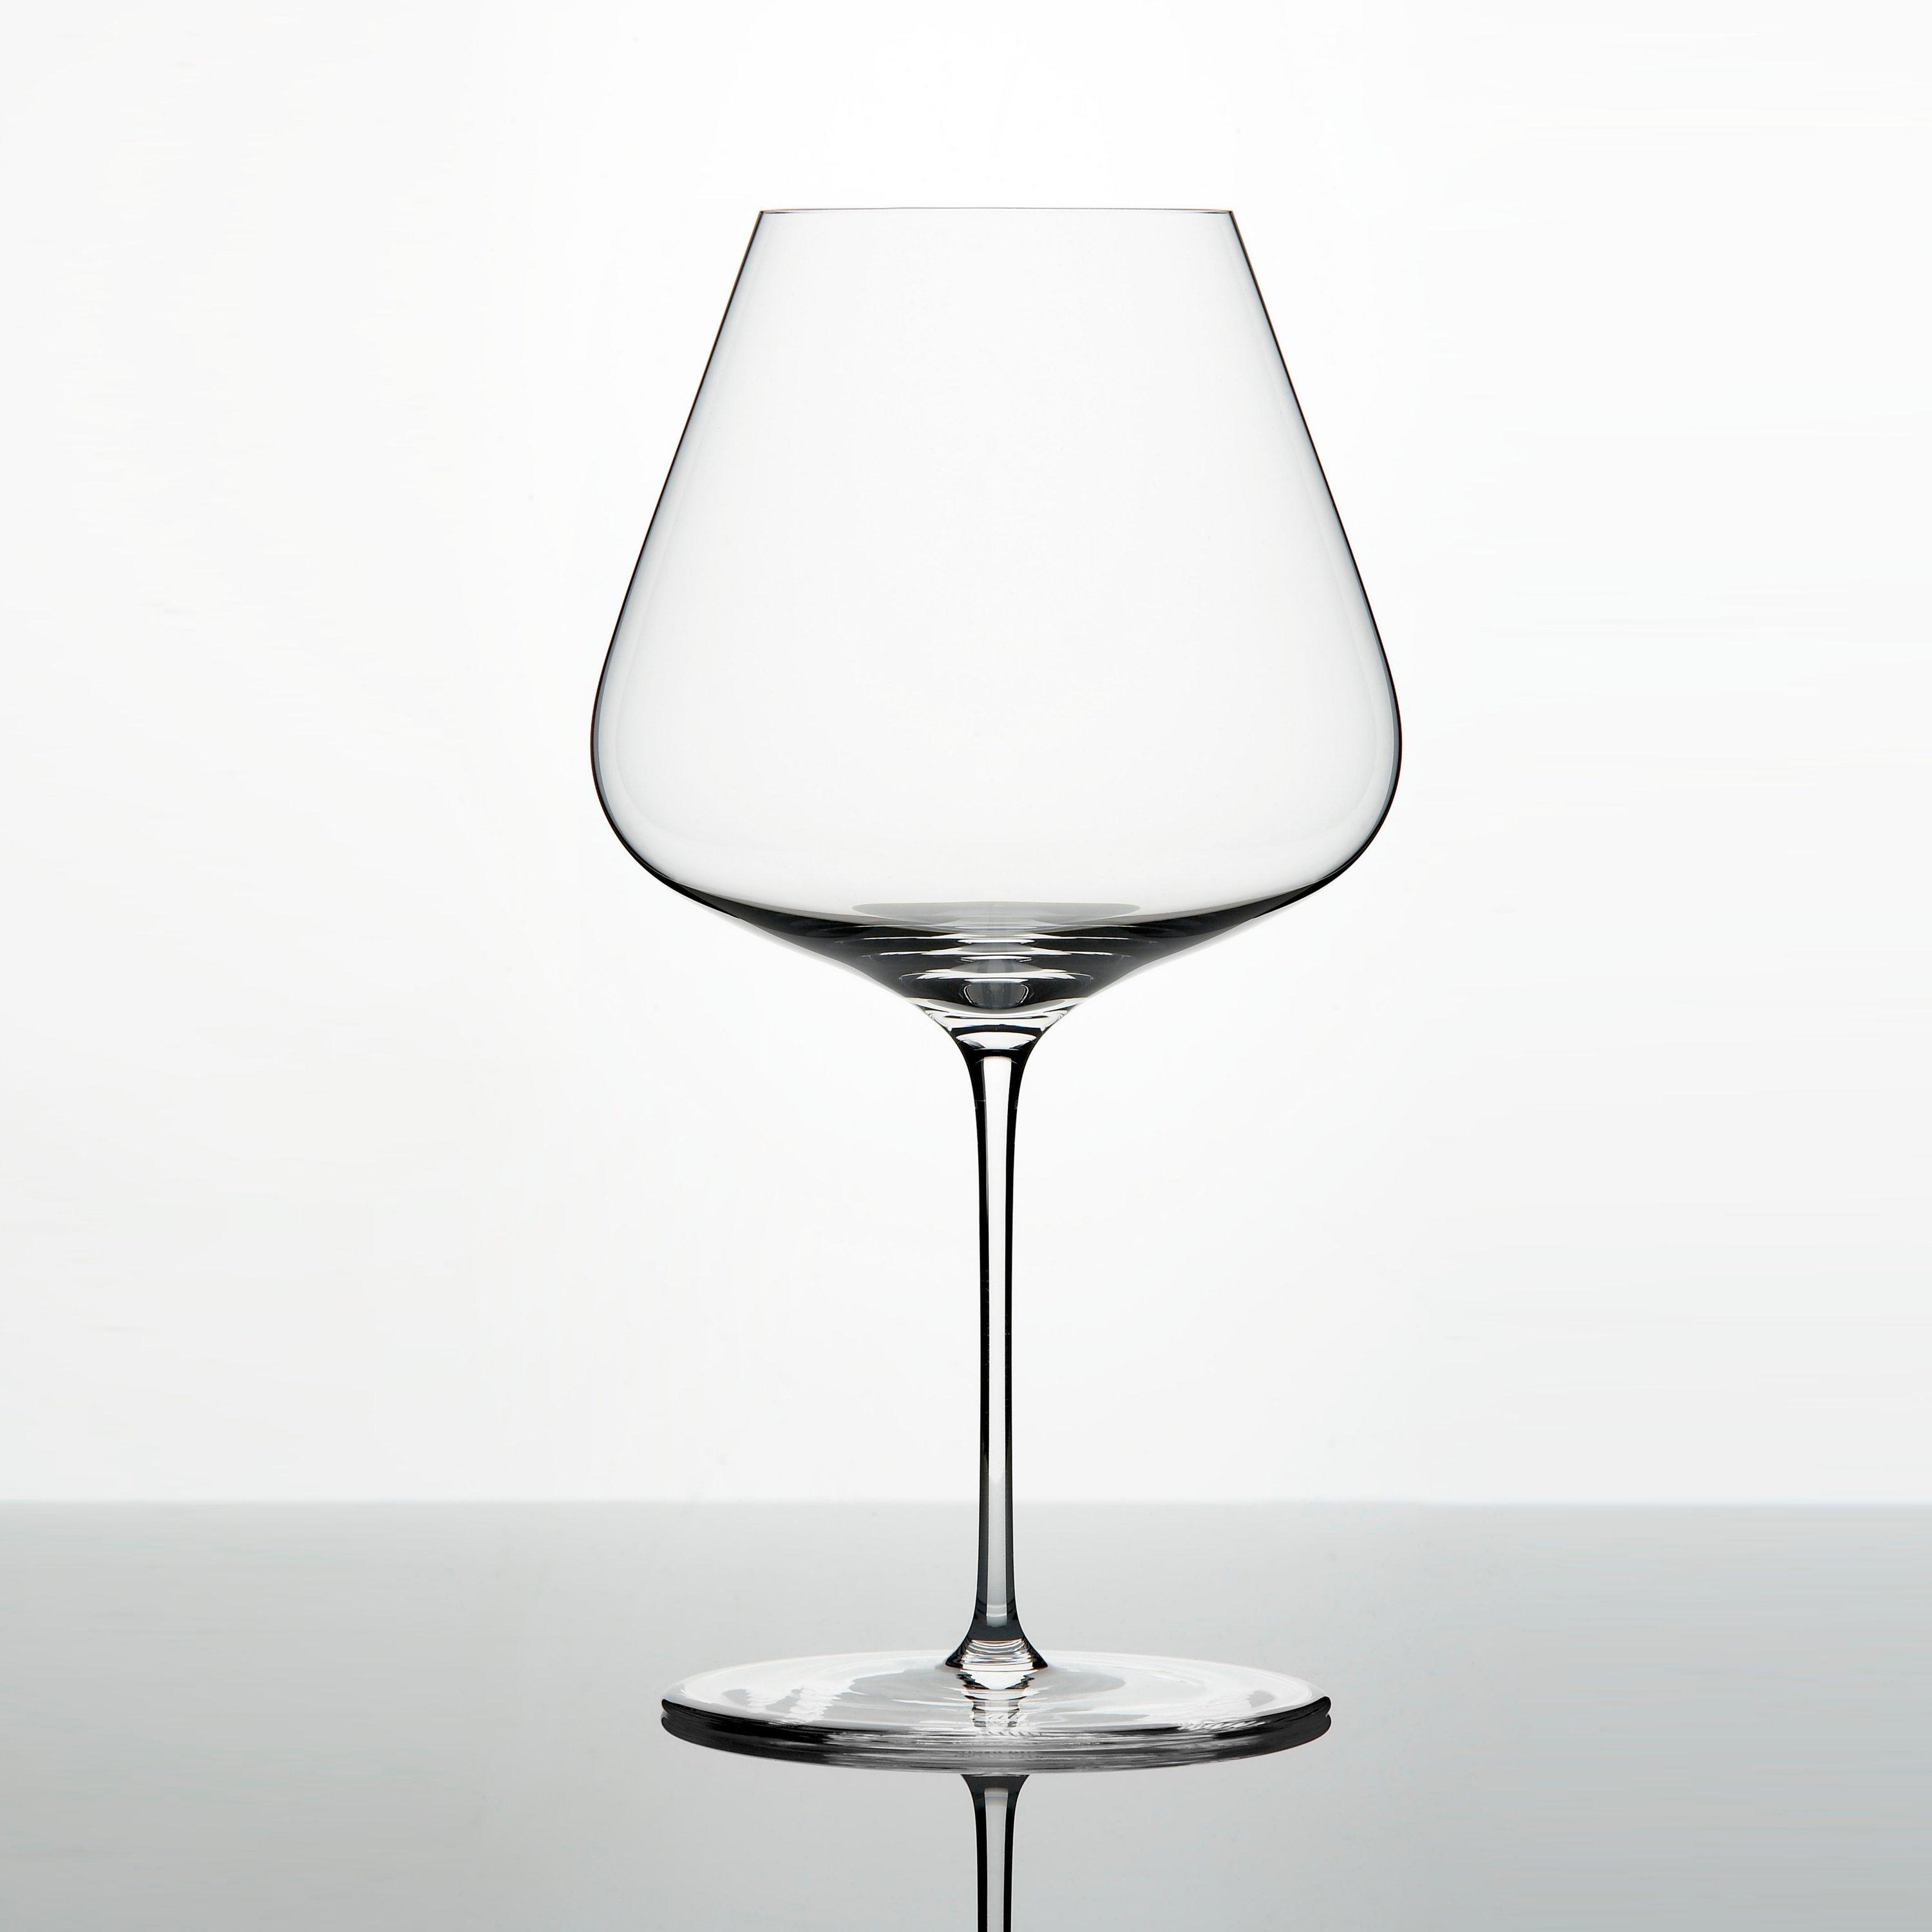  Zalto Denk'Art Universal Hand-Blown Crystal Wine